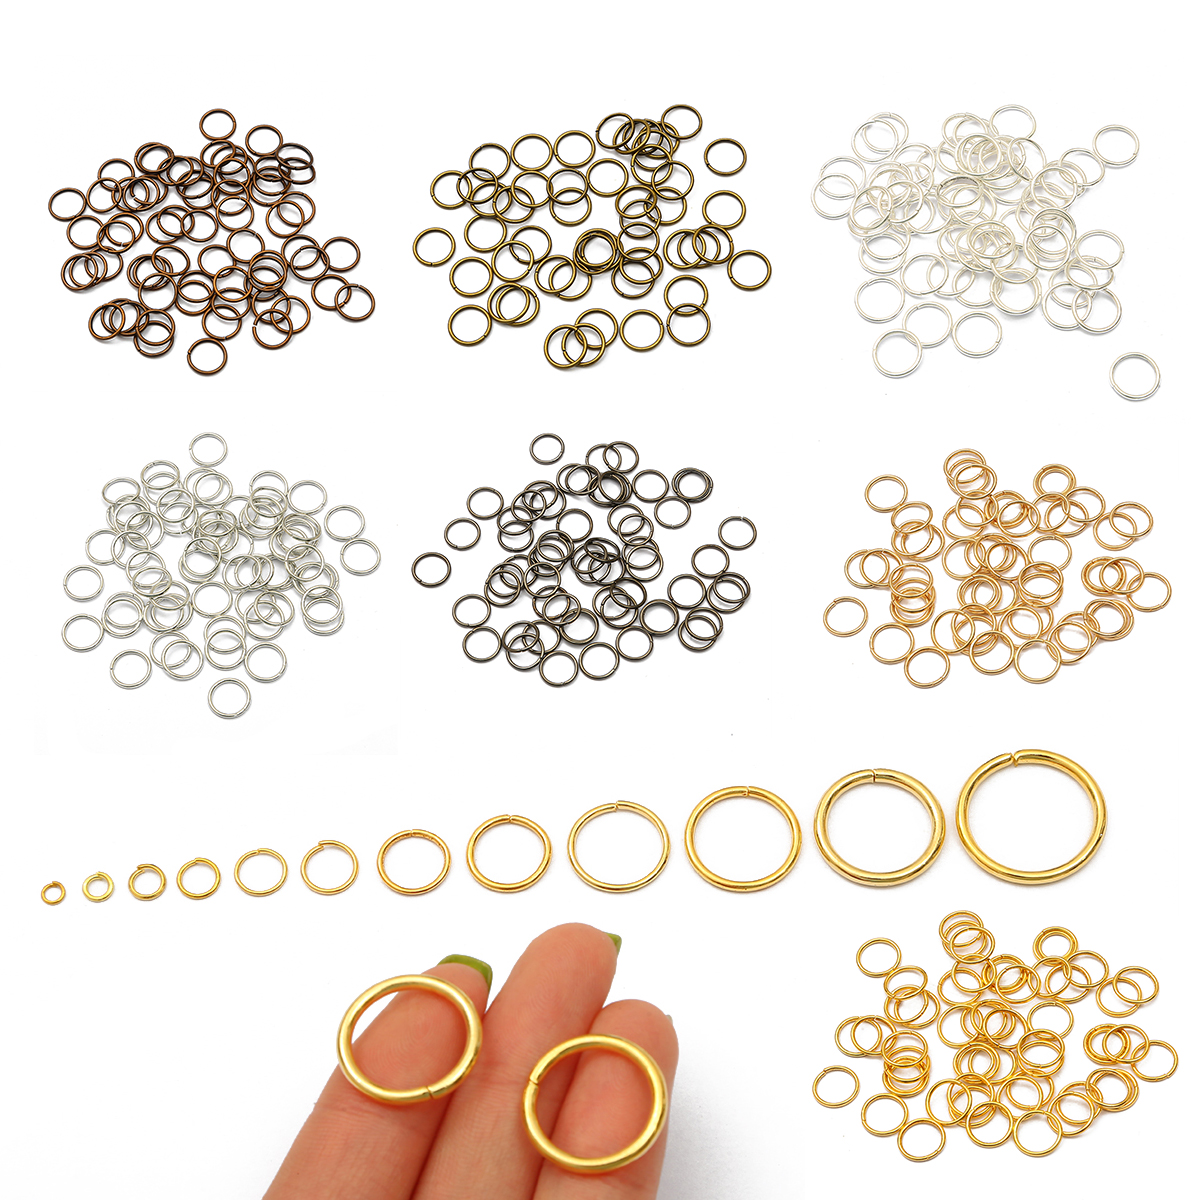 3-16mm Metal Open Jump Rings Split Rings Connectors For DIY Jewelry Making#